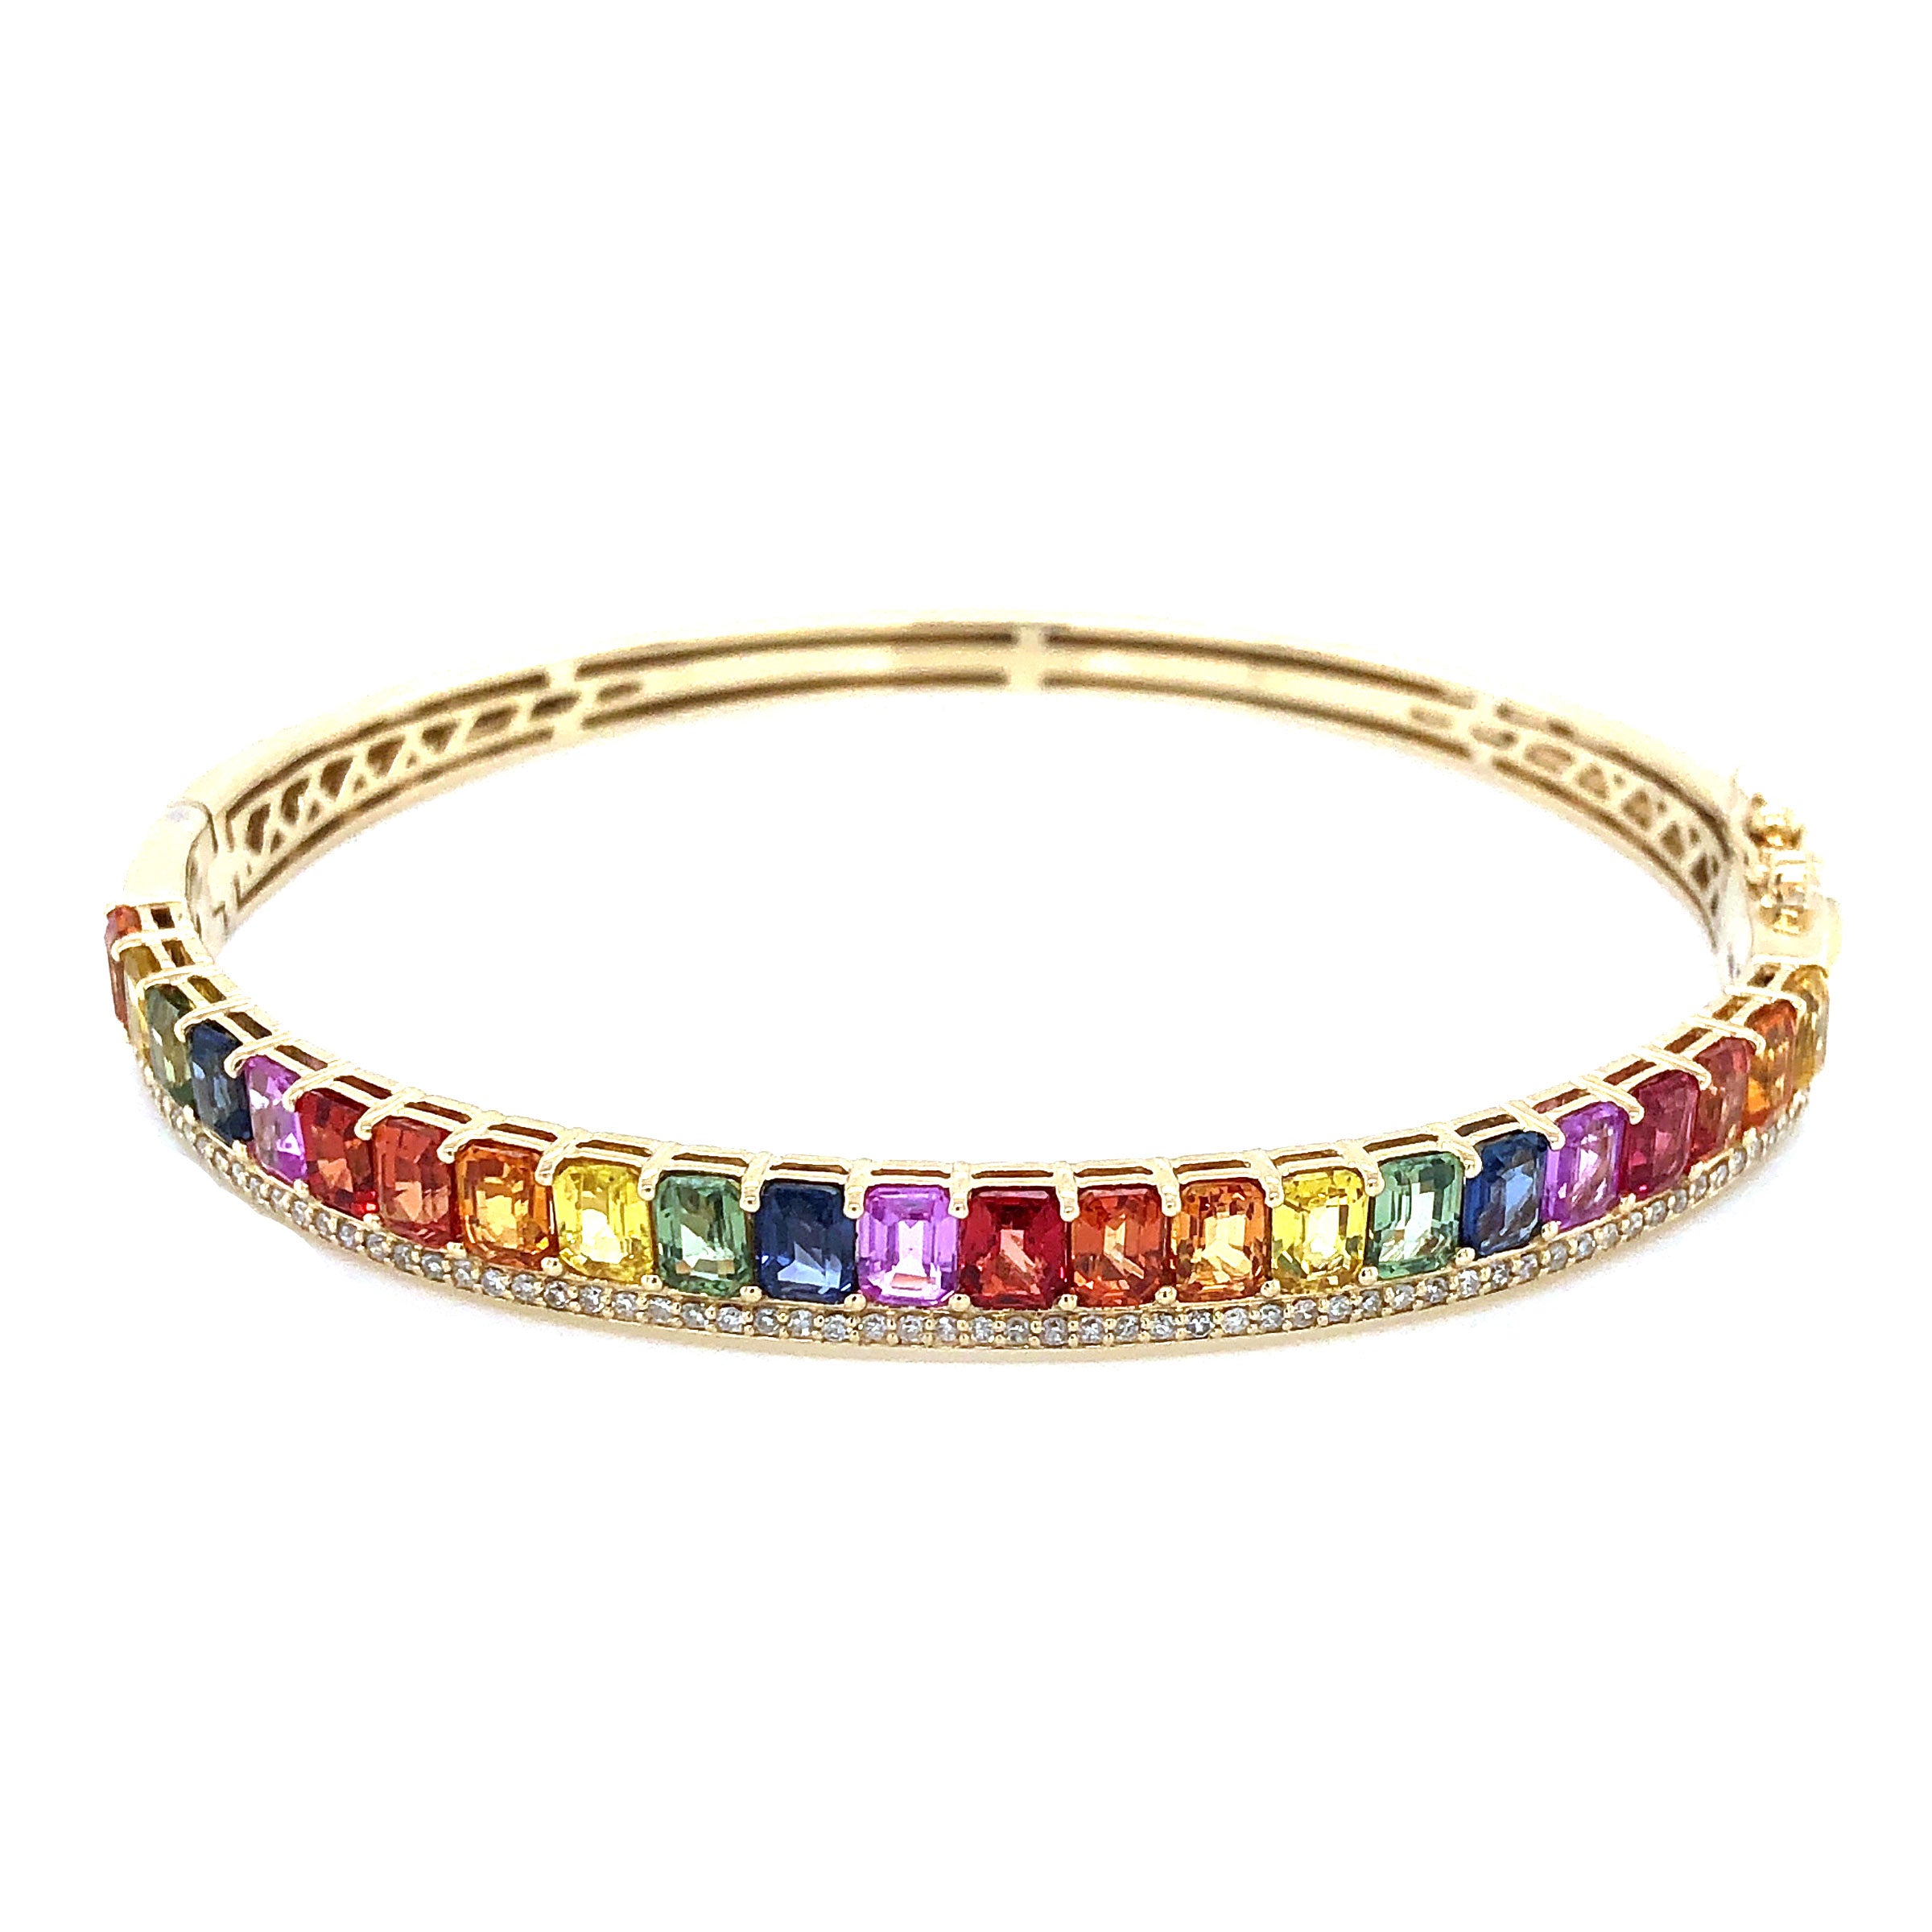 The Fancy Summer Rainbow Precious Gemstone Bracelet